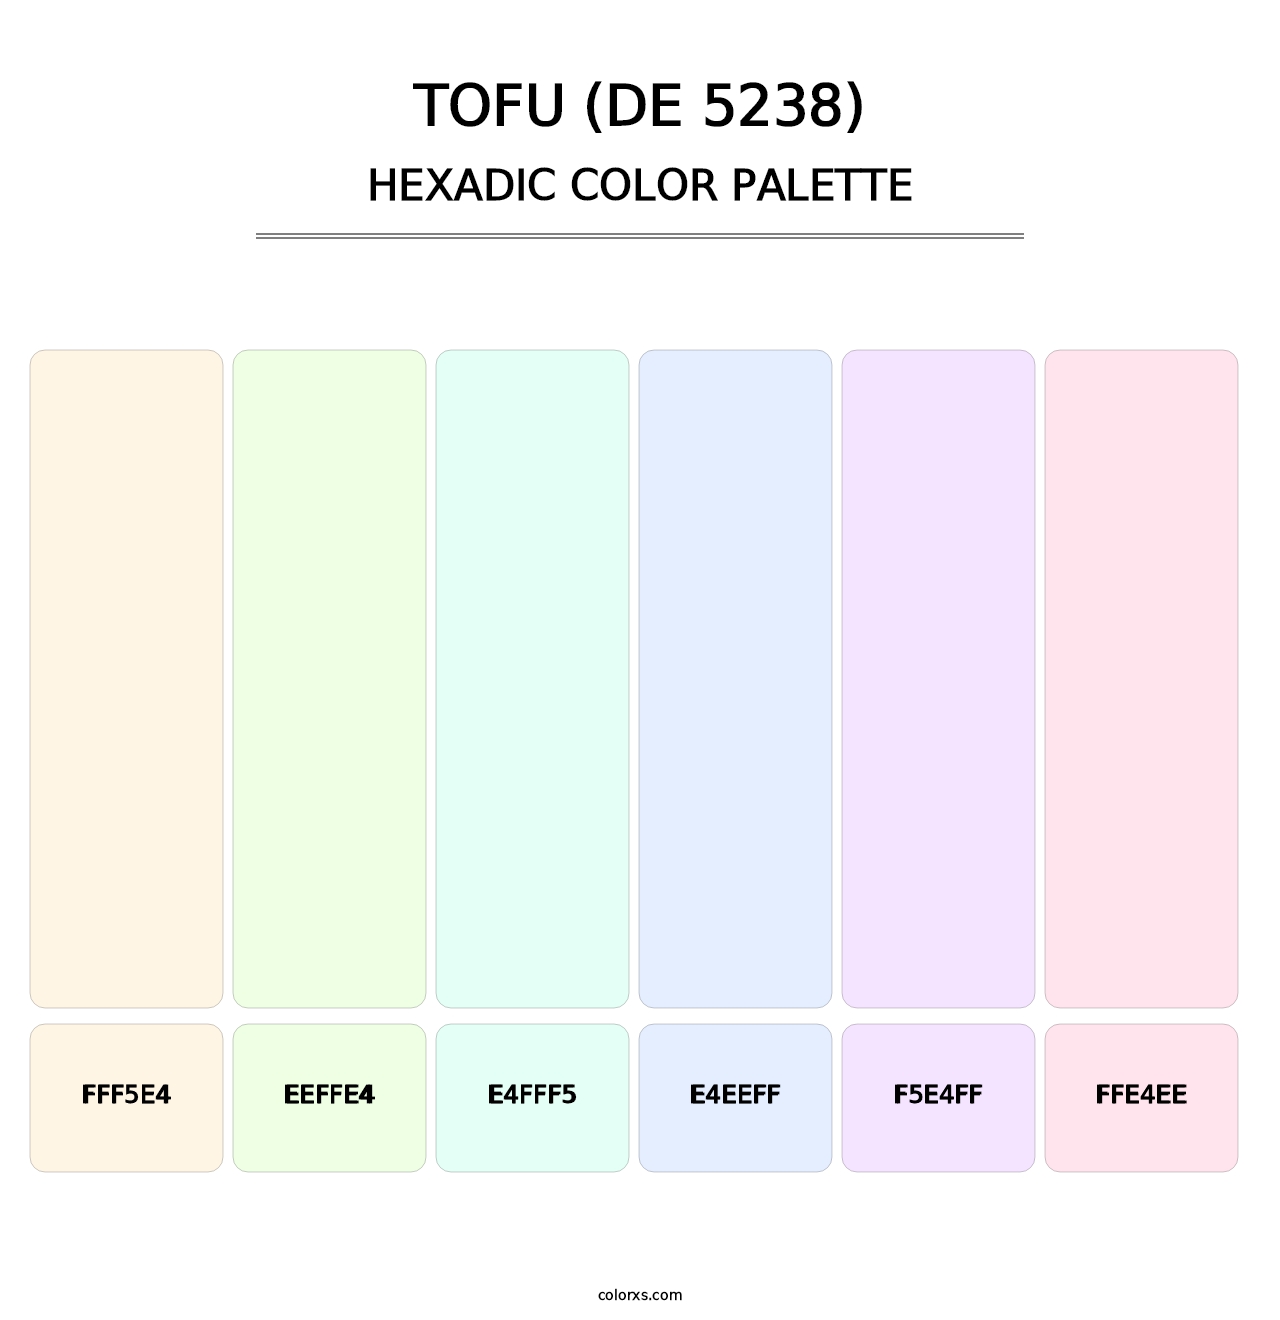 Tofu (DE 5238) - Hexadic Color Palette